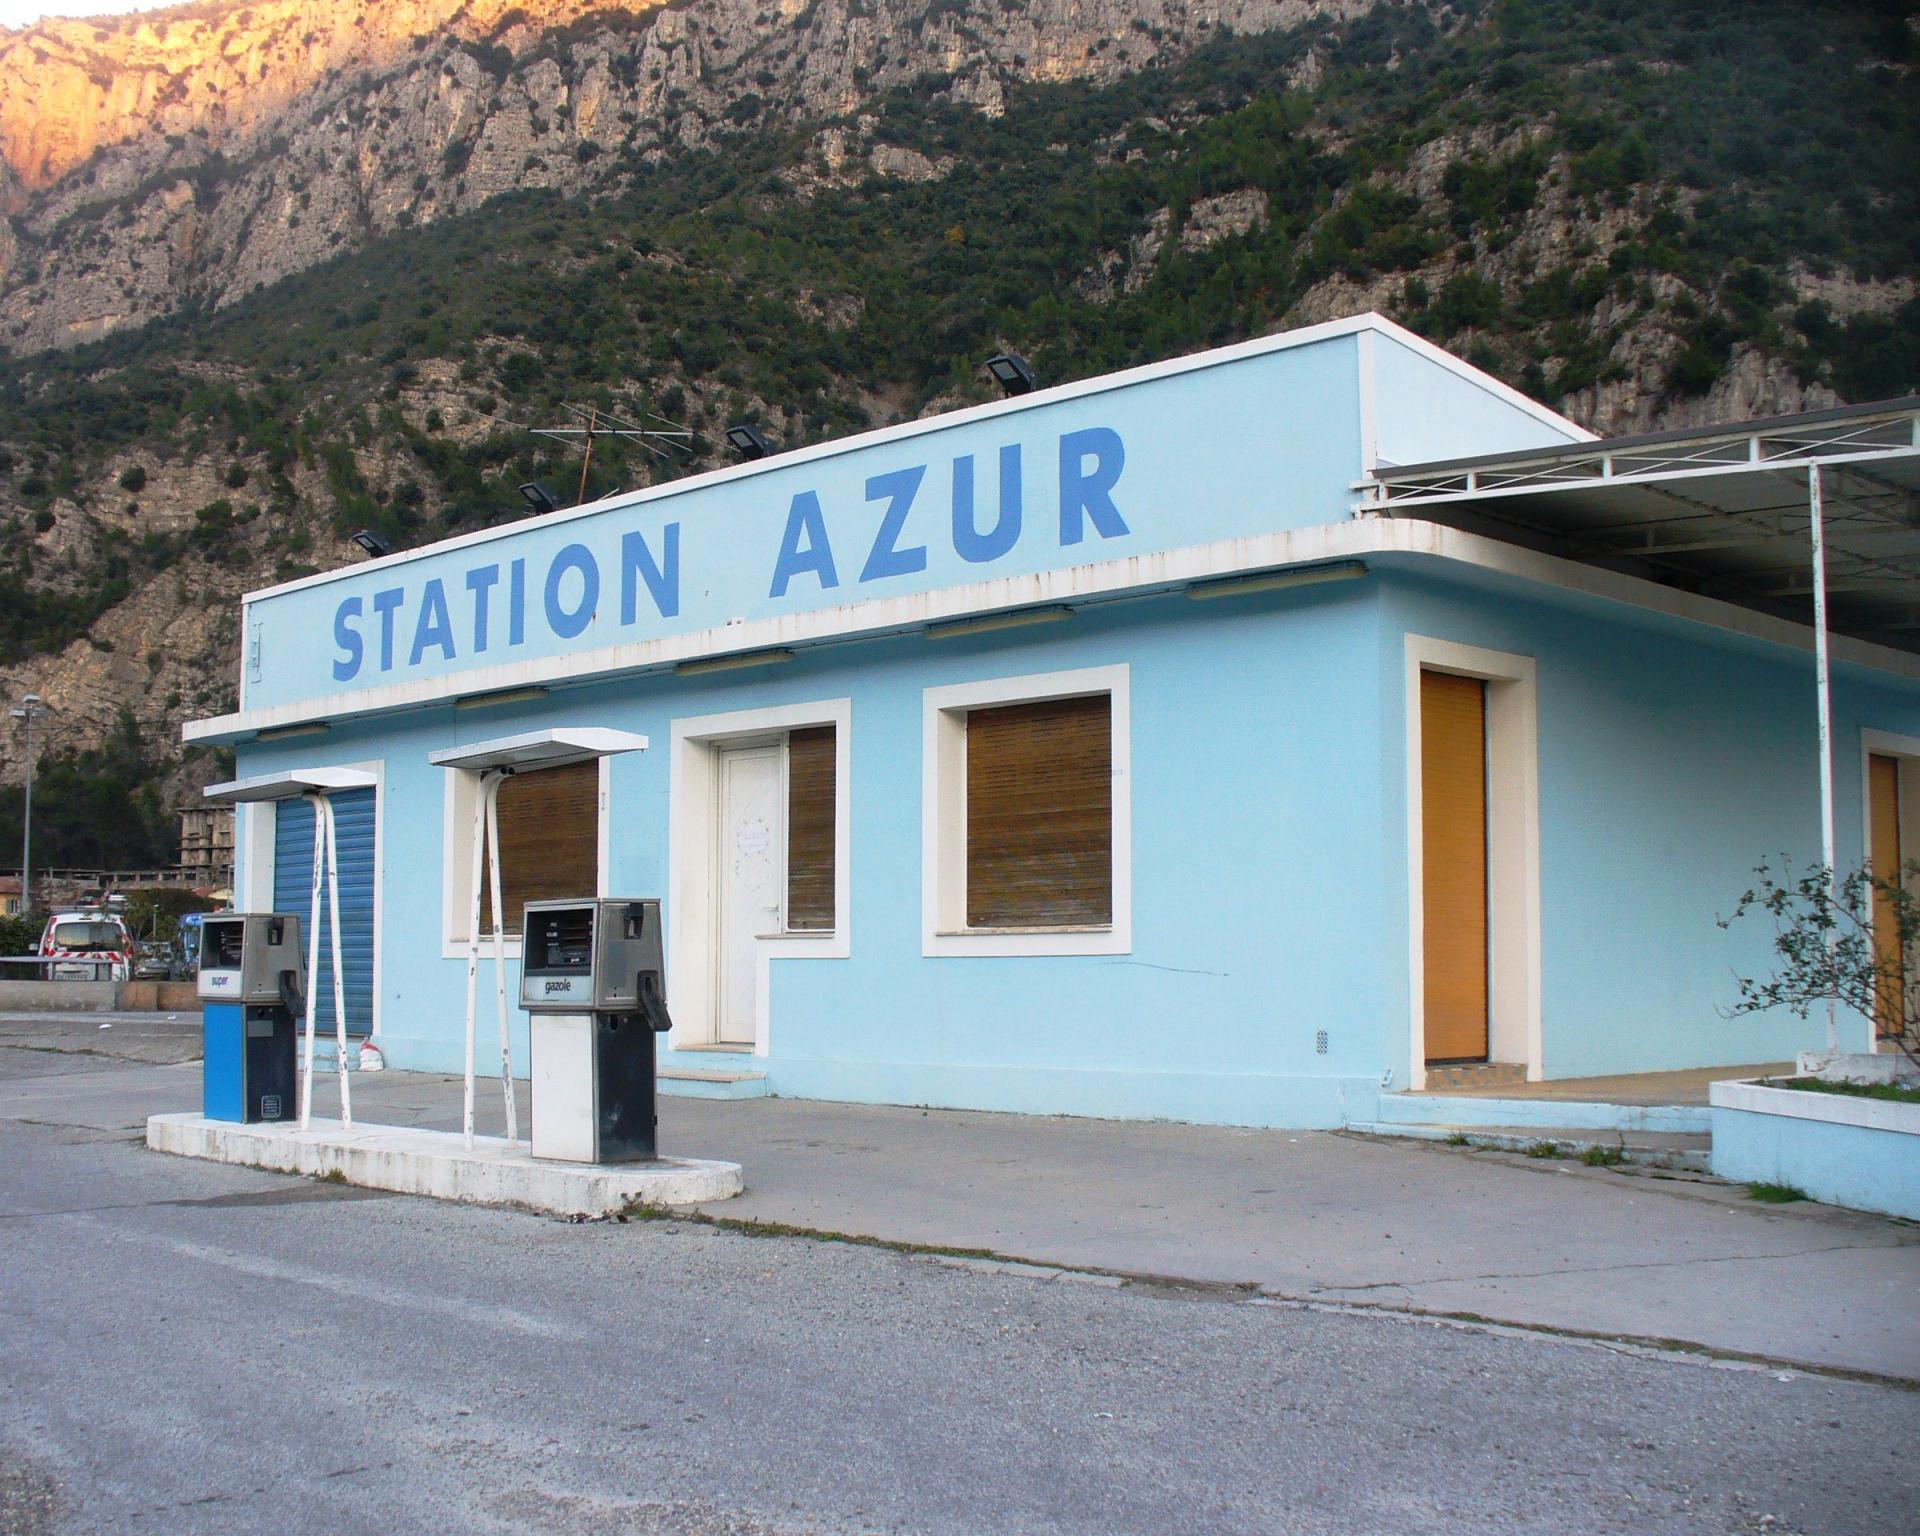 Station azur